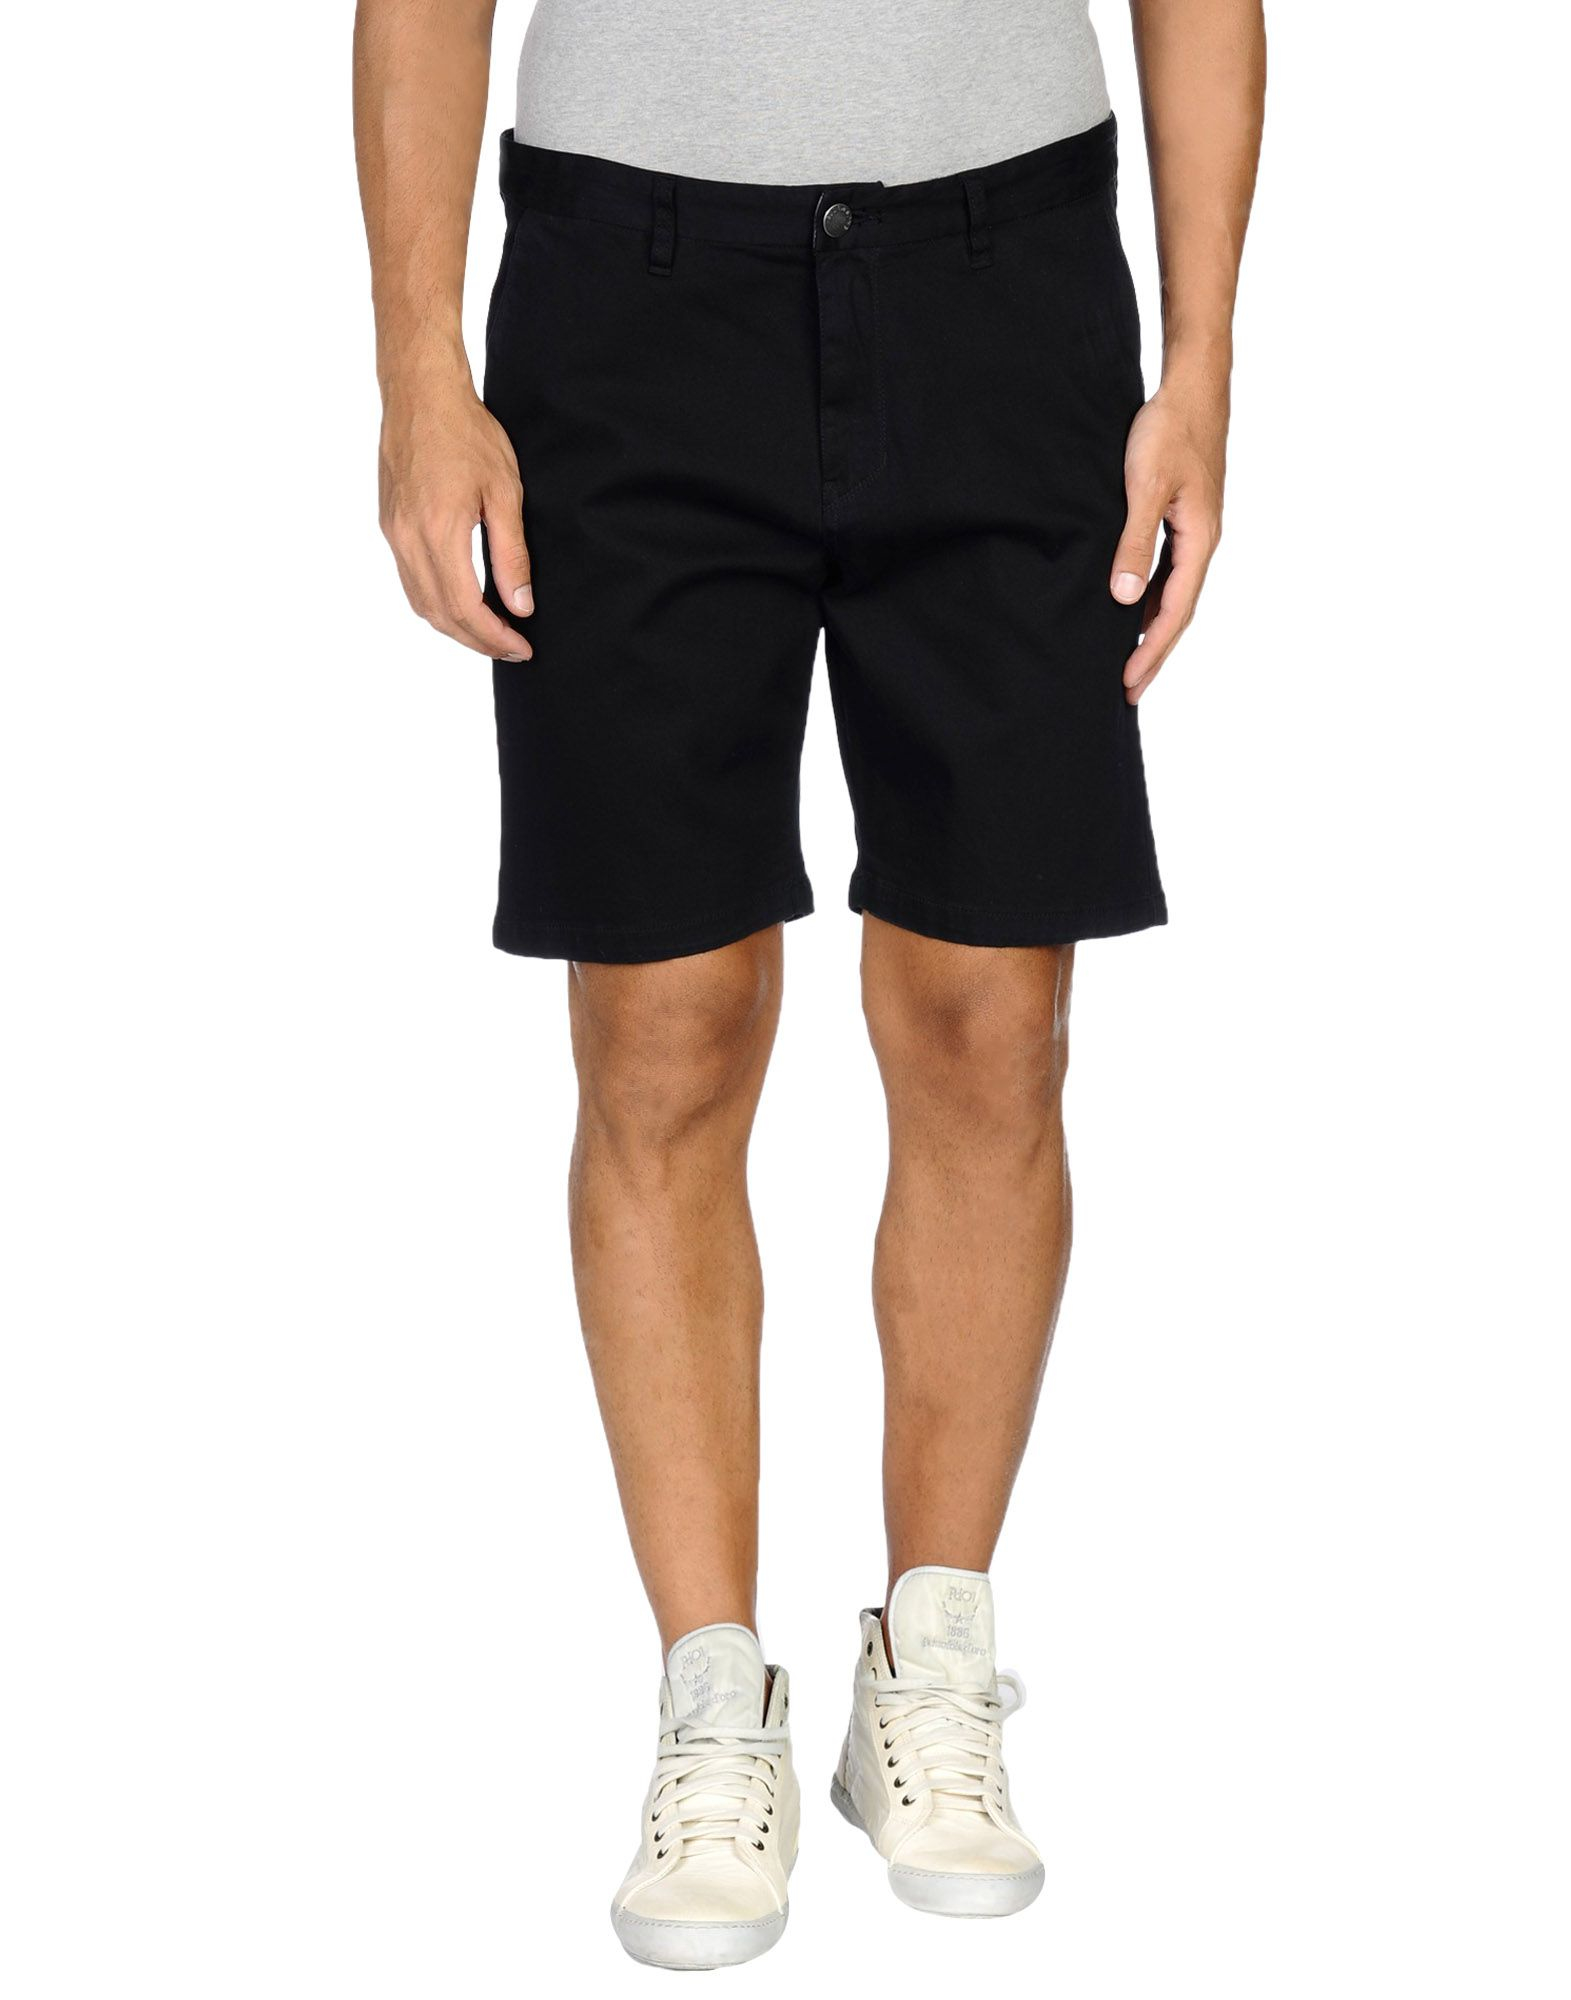 Lyst - Billabong Bermuda Shorts in Black for Men